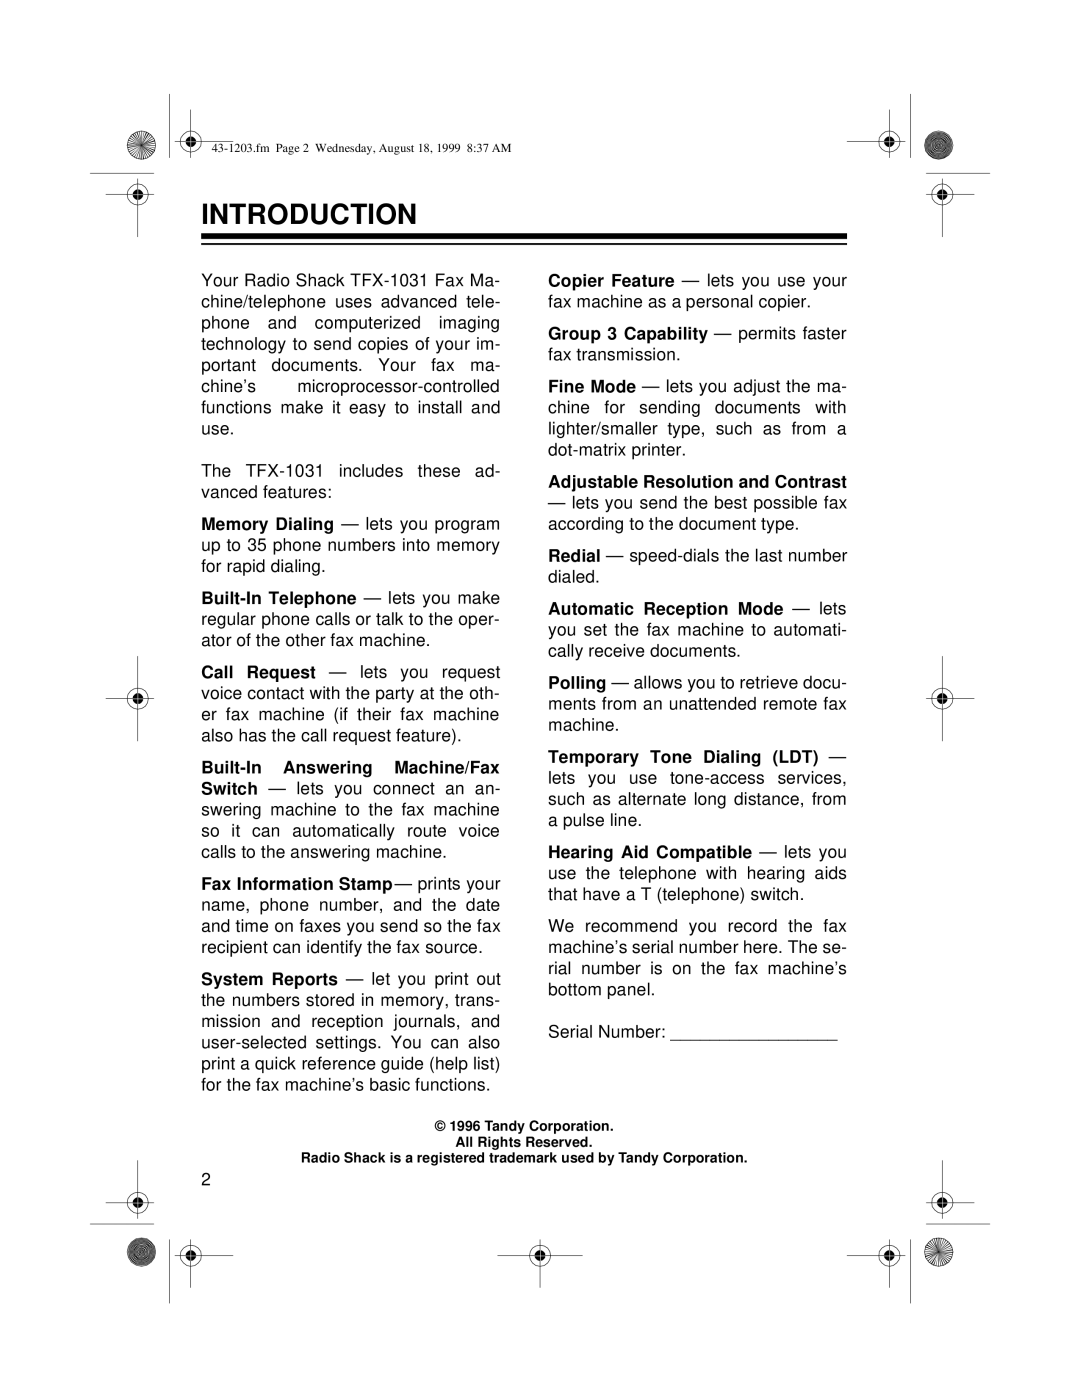 Radio Shack TFX-1031 owner manual Introduction 